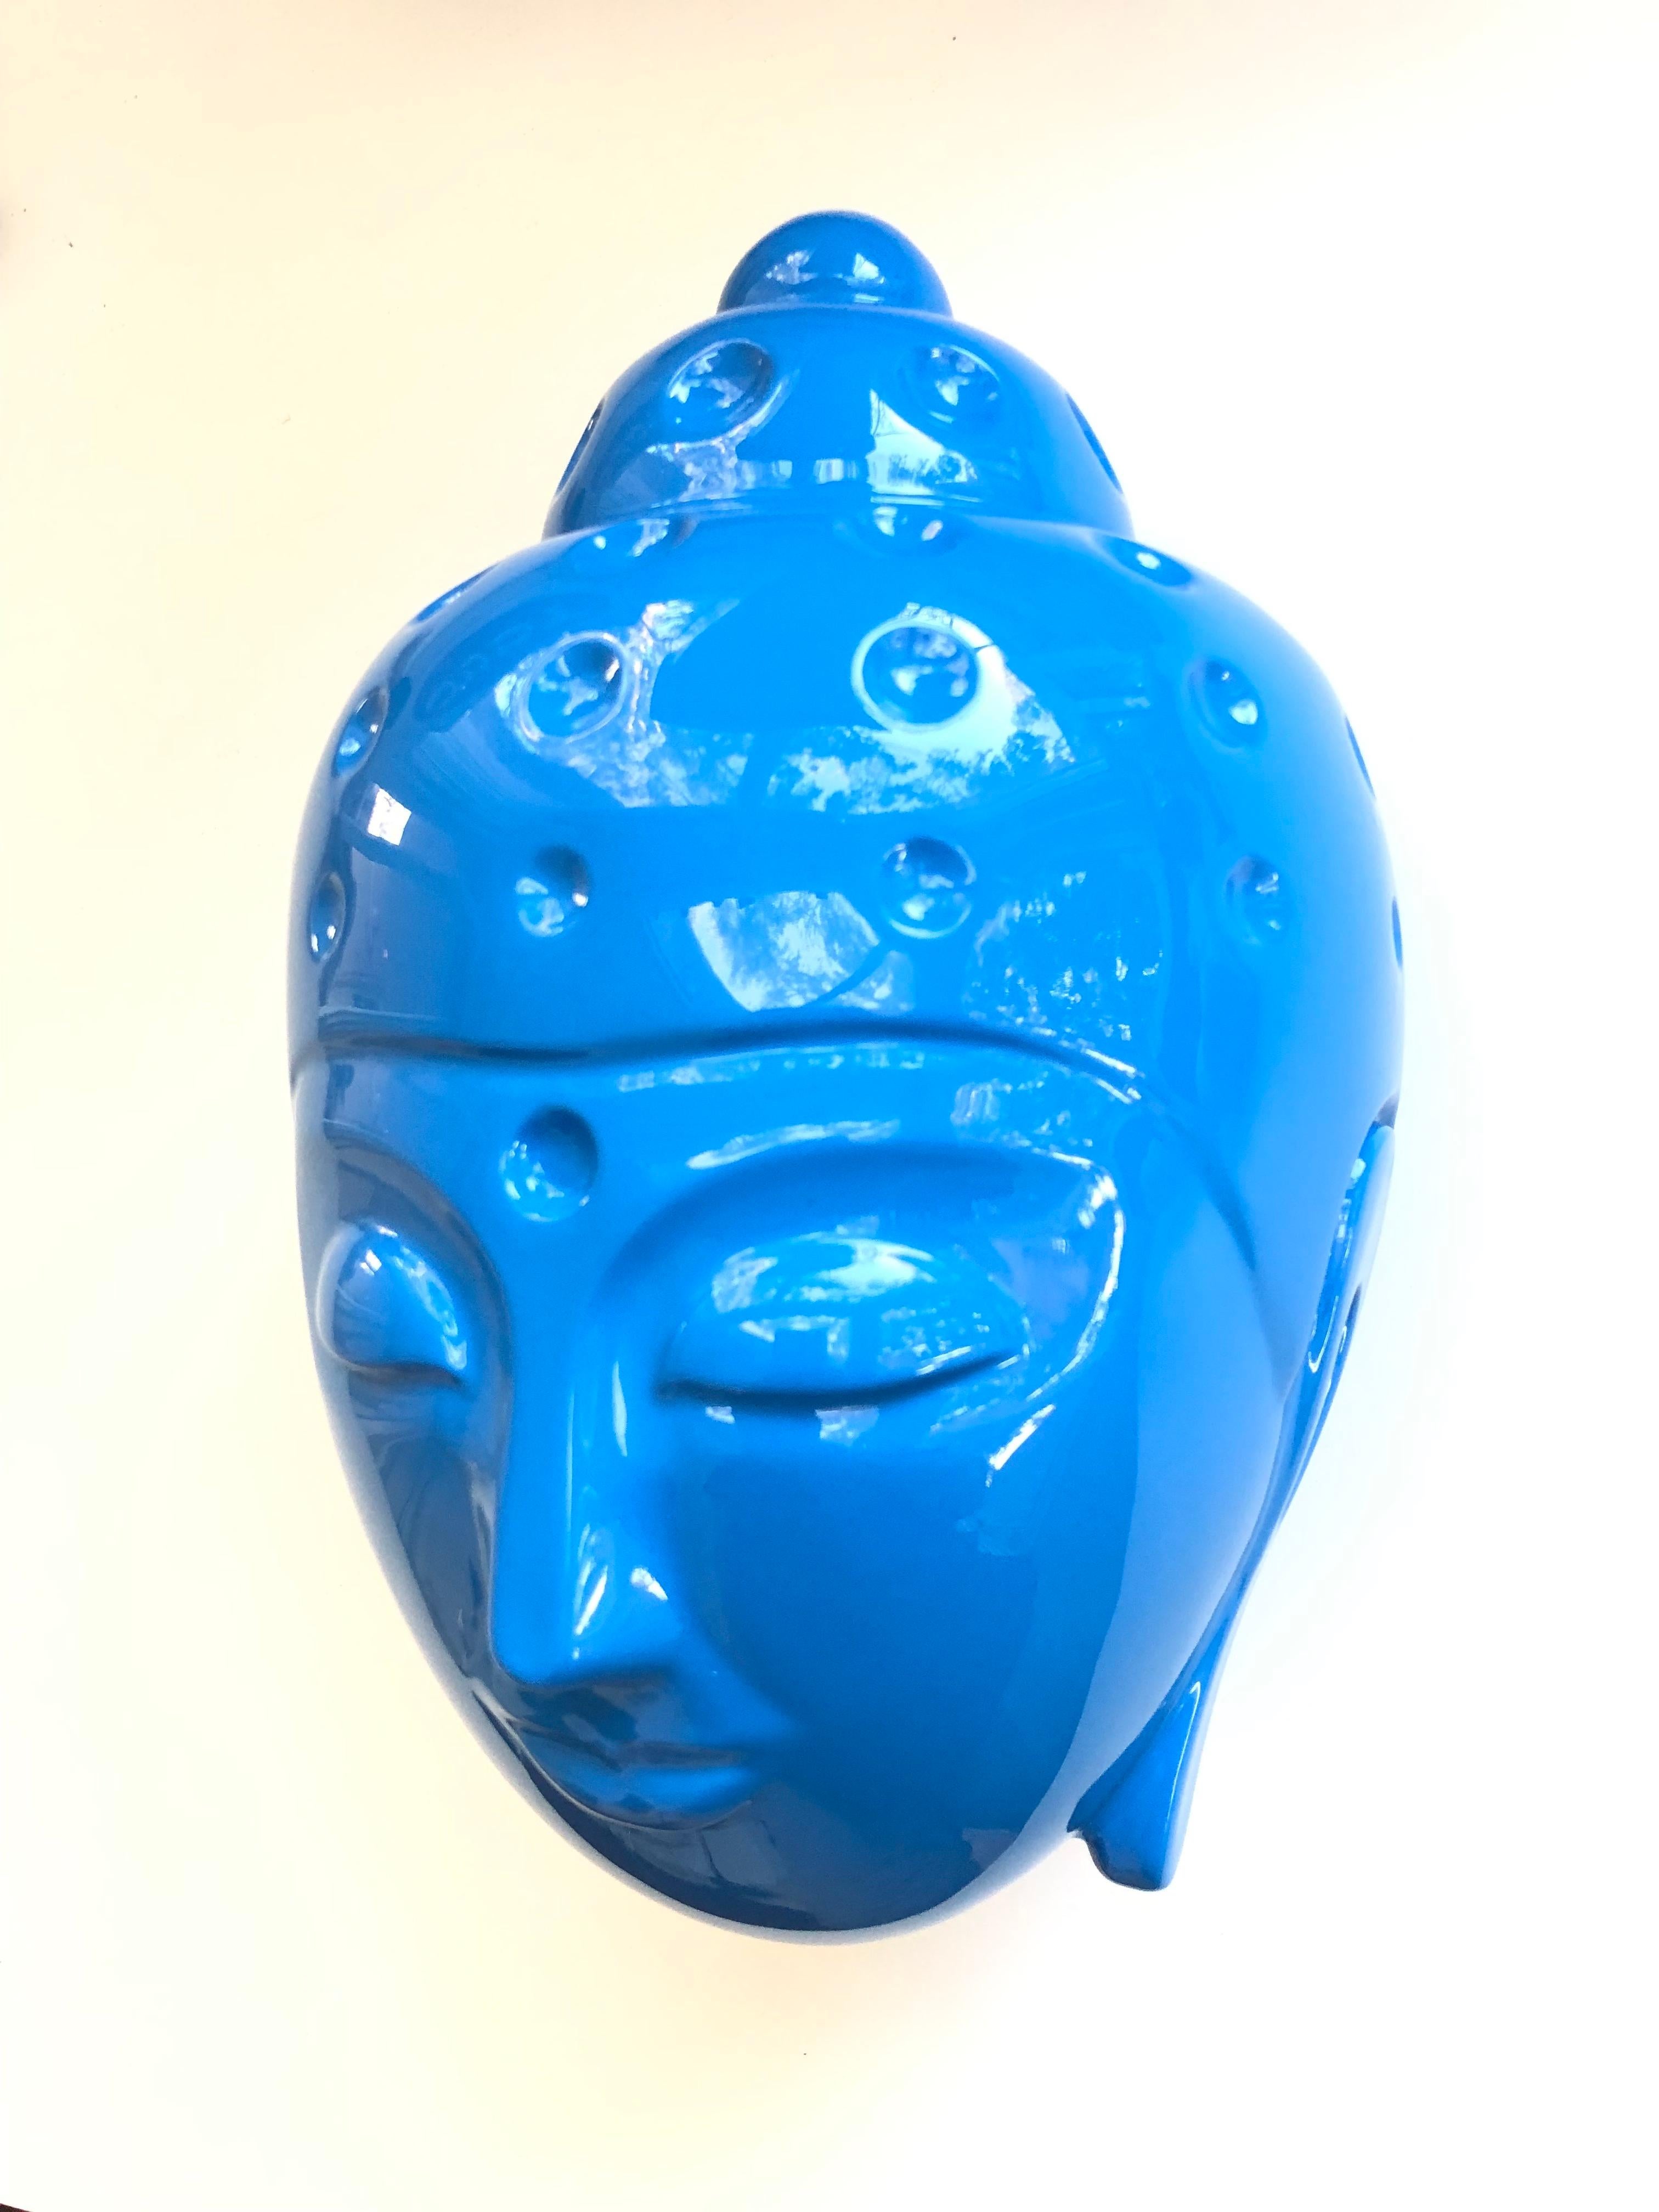 Contemporary buddha head sculpture - blue car paint - Sculpture by Tal Nehoray